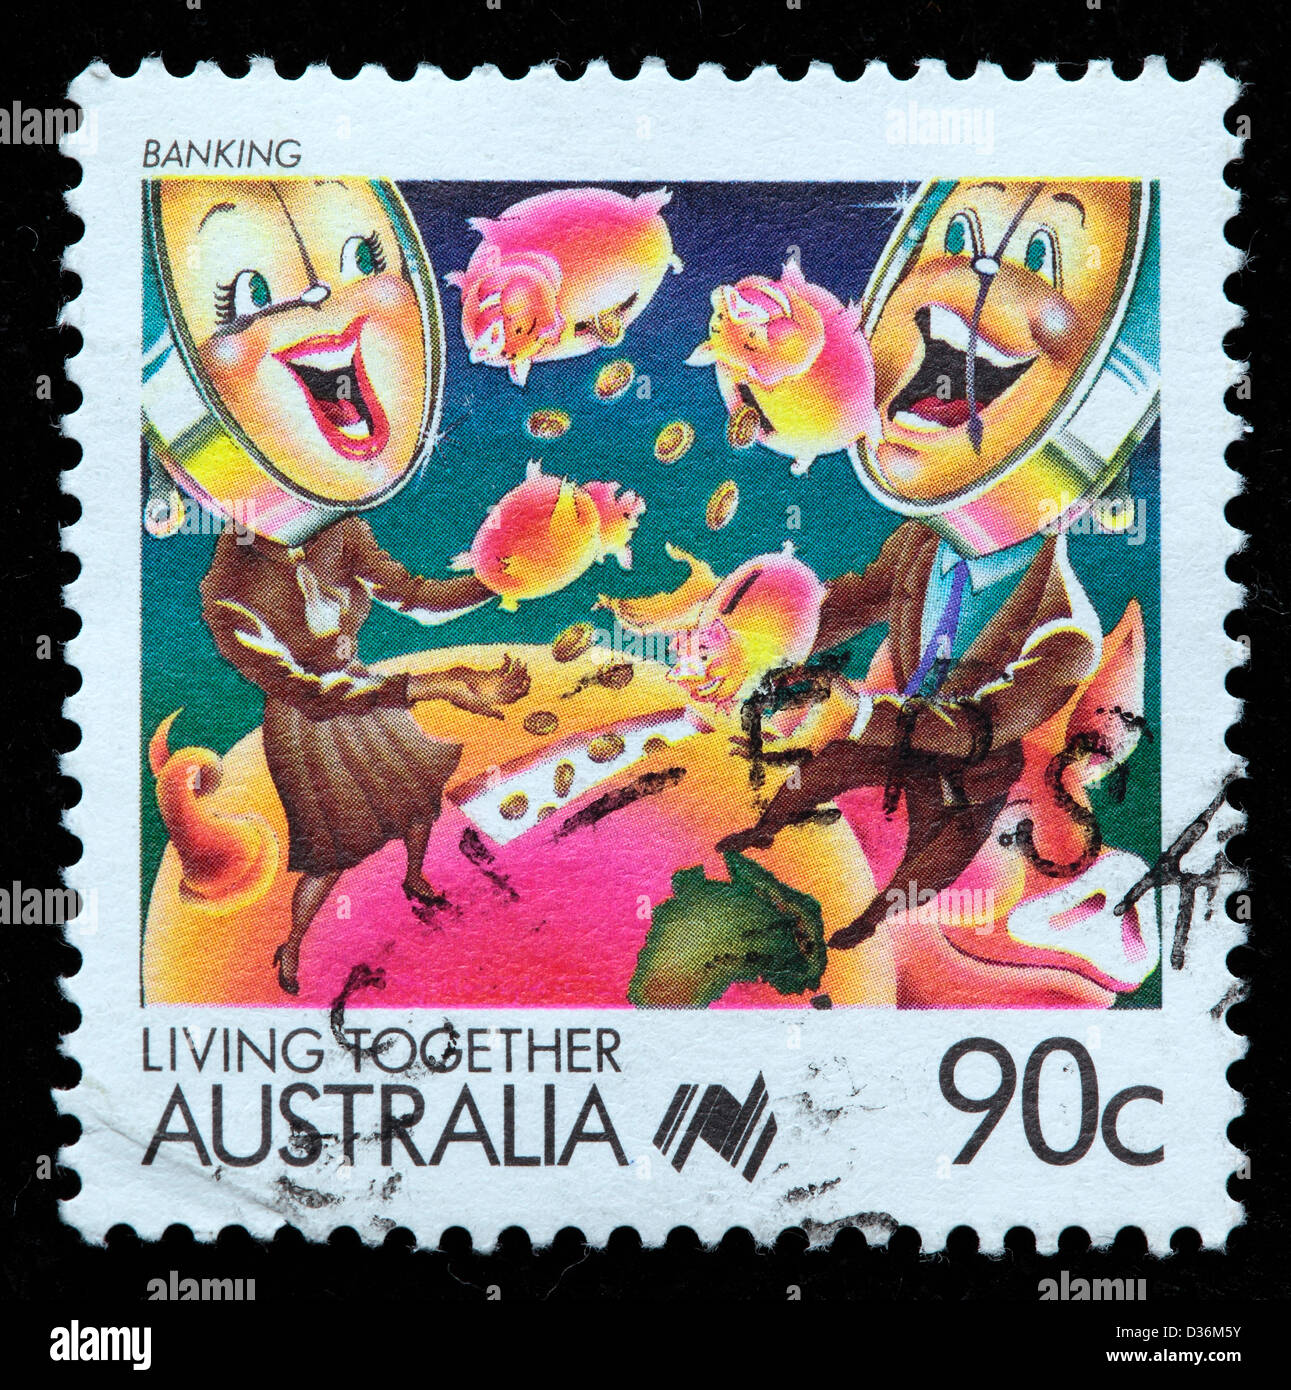 Banking, Living together, postage stamp, Australia, 1988 Stock Photo